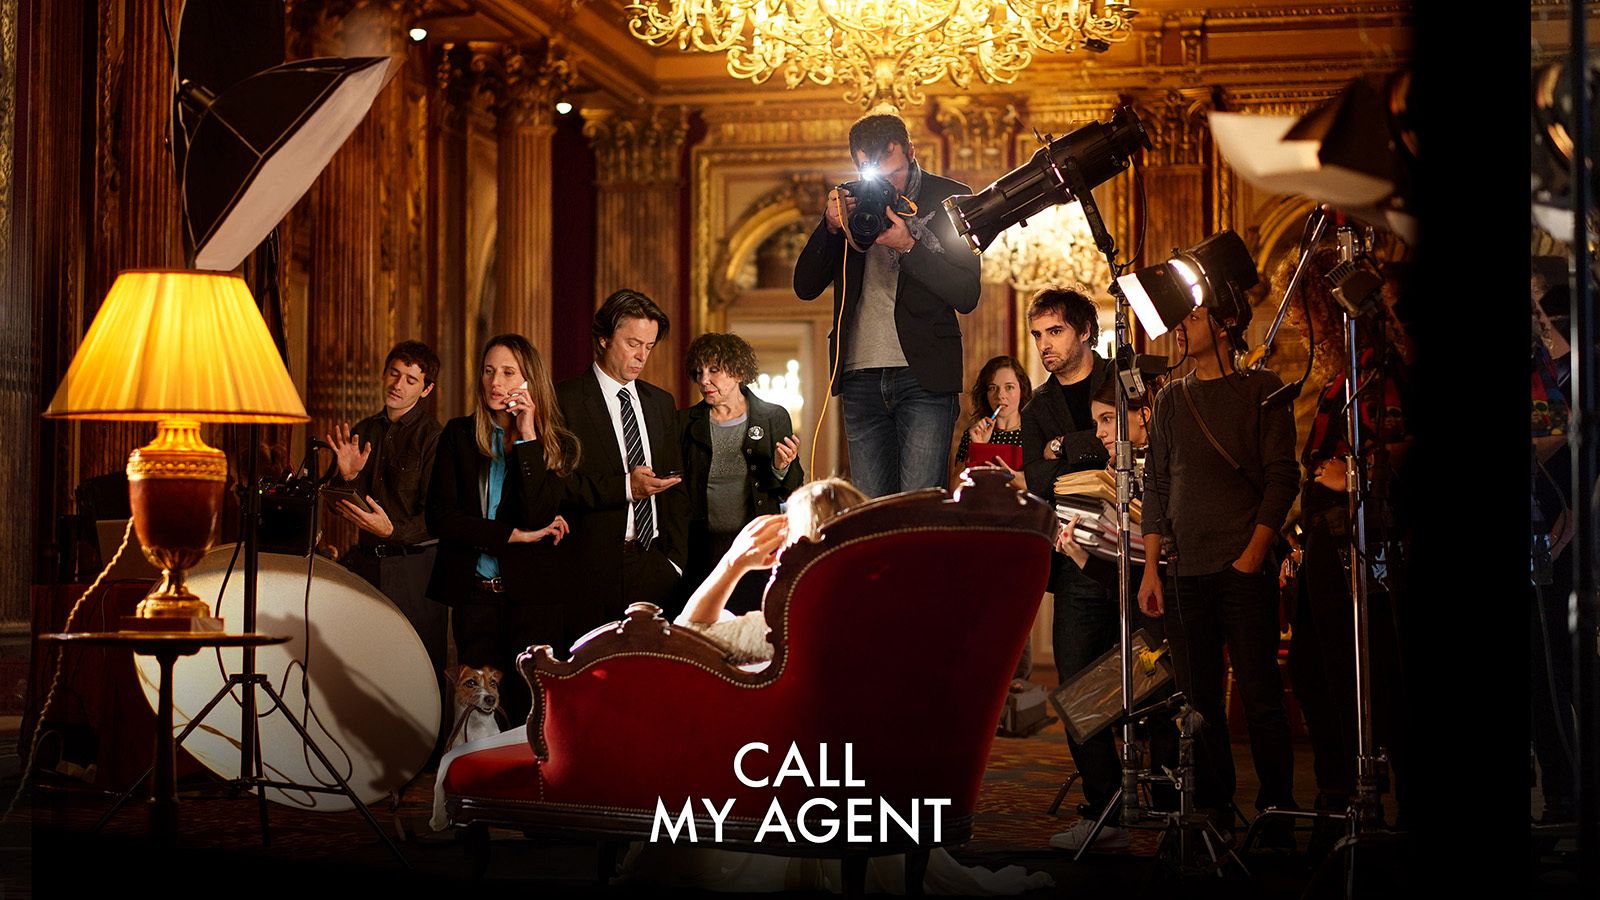 'Call my agent'